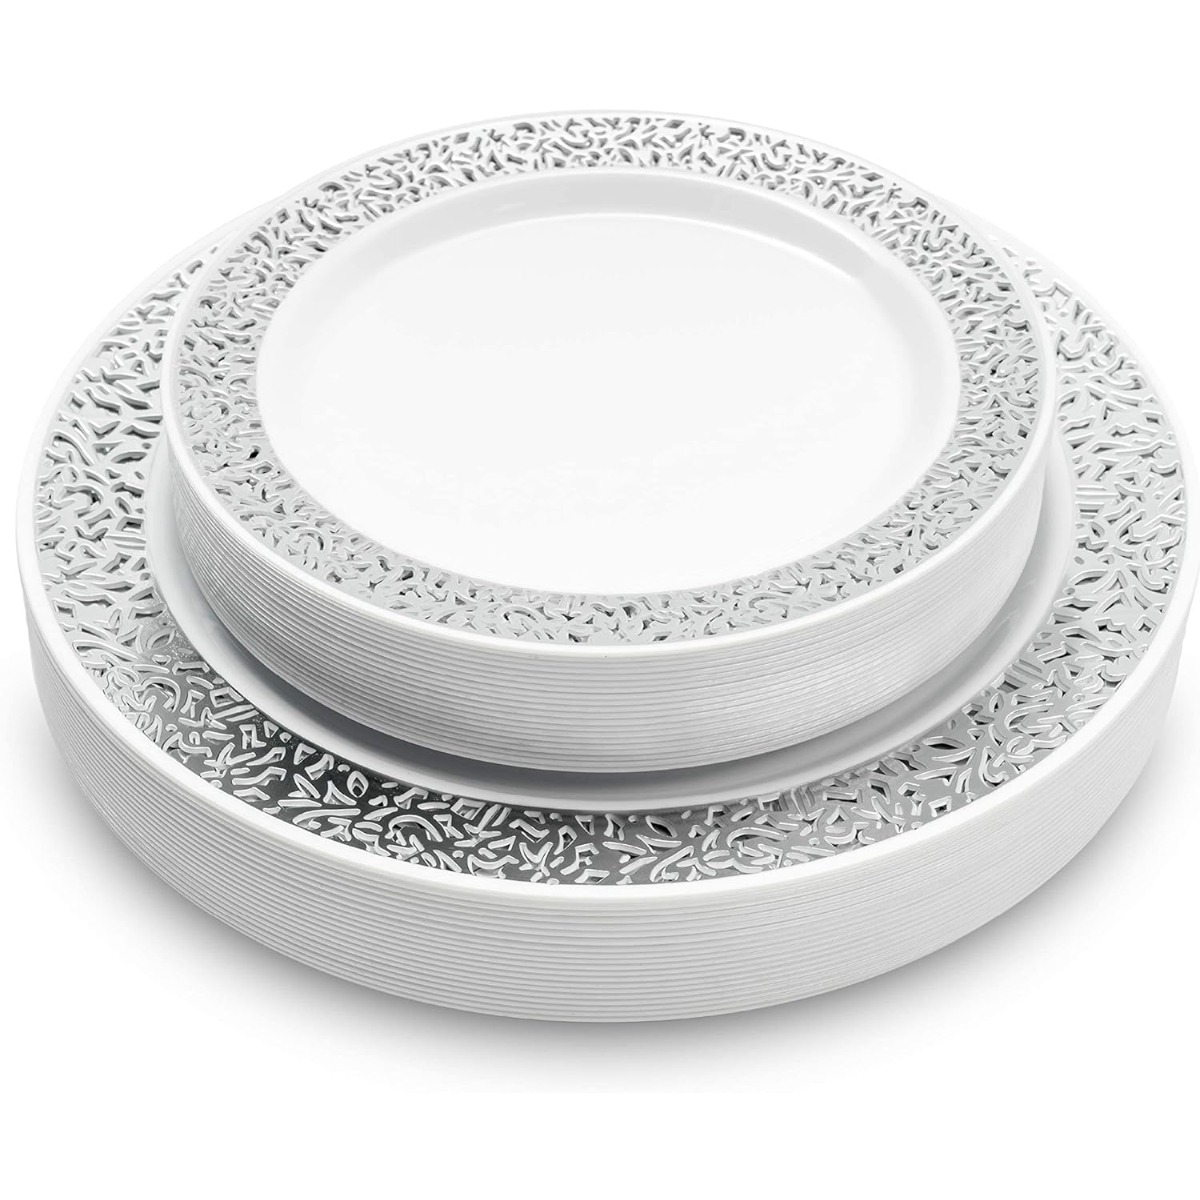 

Elegant 20-piece Reusable Plastic Dessert Plates With Rim - Perfect For Weddings, Birthdays, Picnics & Bbqs